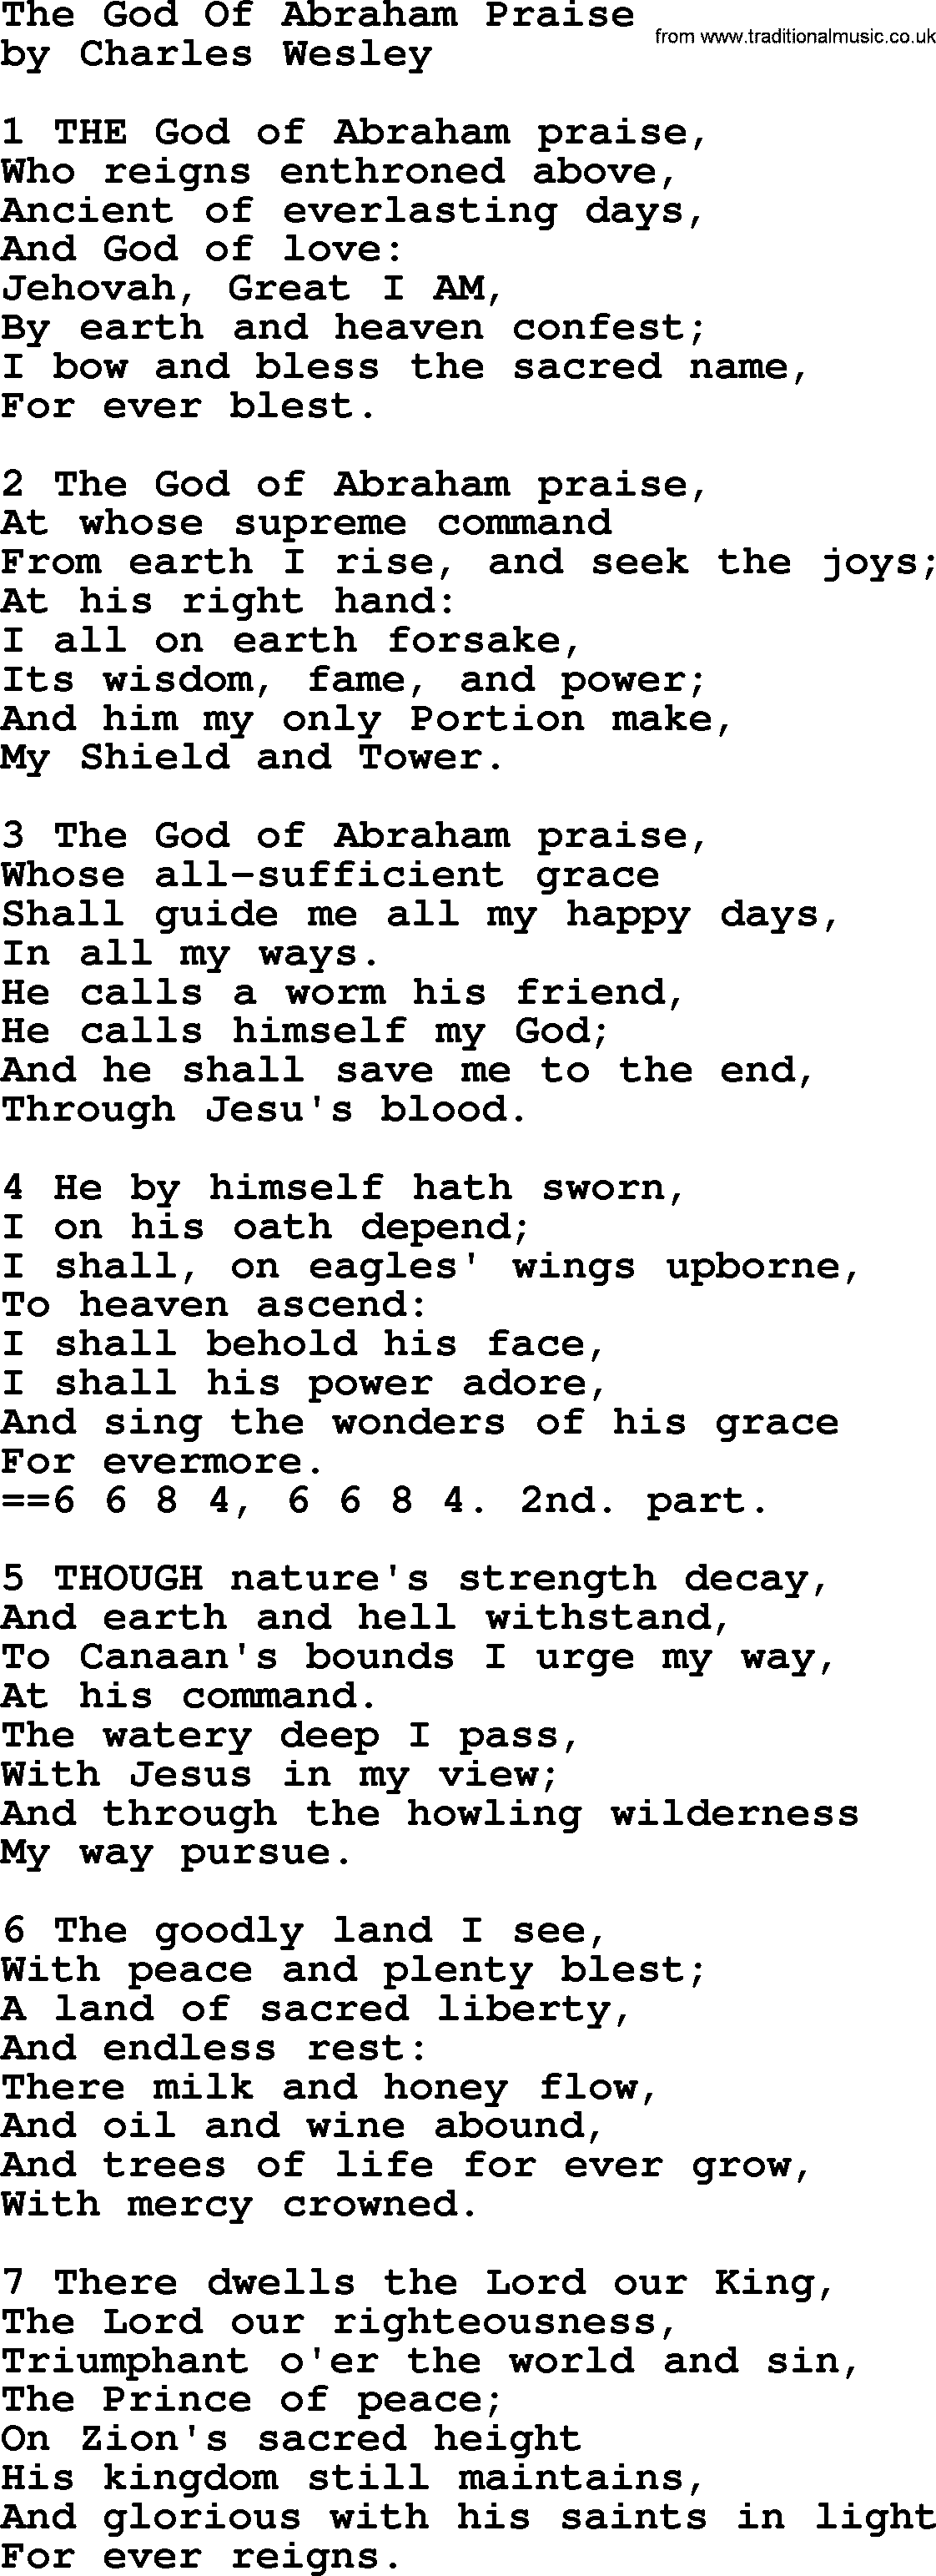 Charles Wesley hymn: The God Of Abraham Praise, lyrics